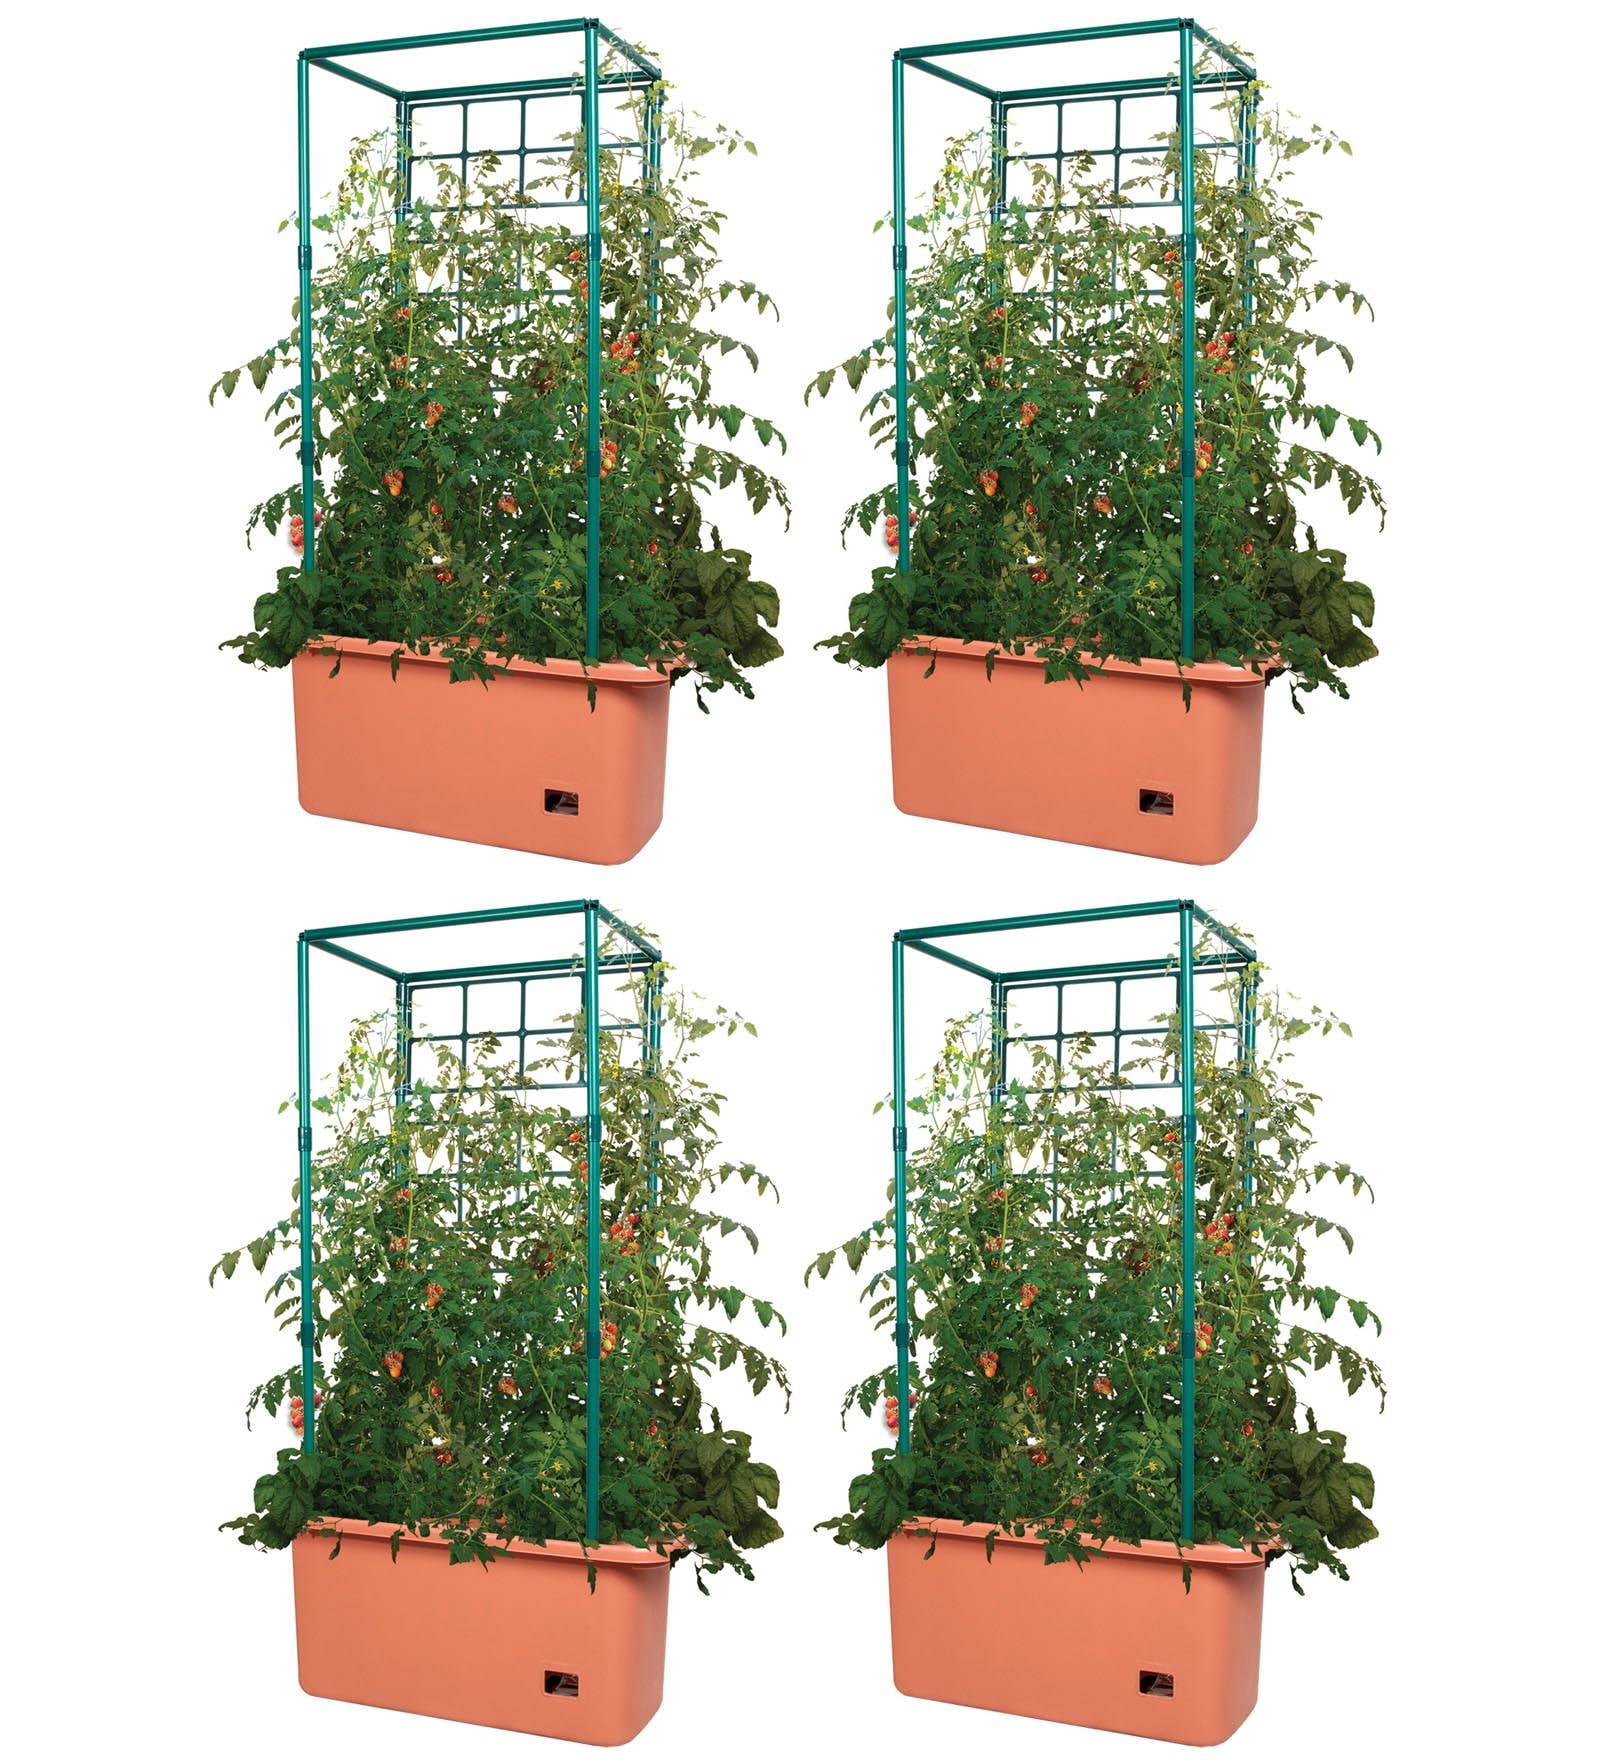 Titan Tomato Self-Watering Grow Bag & Trellis